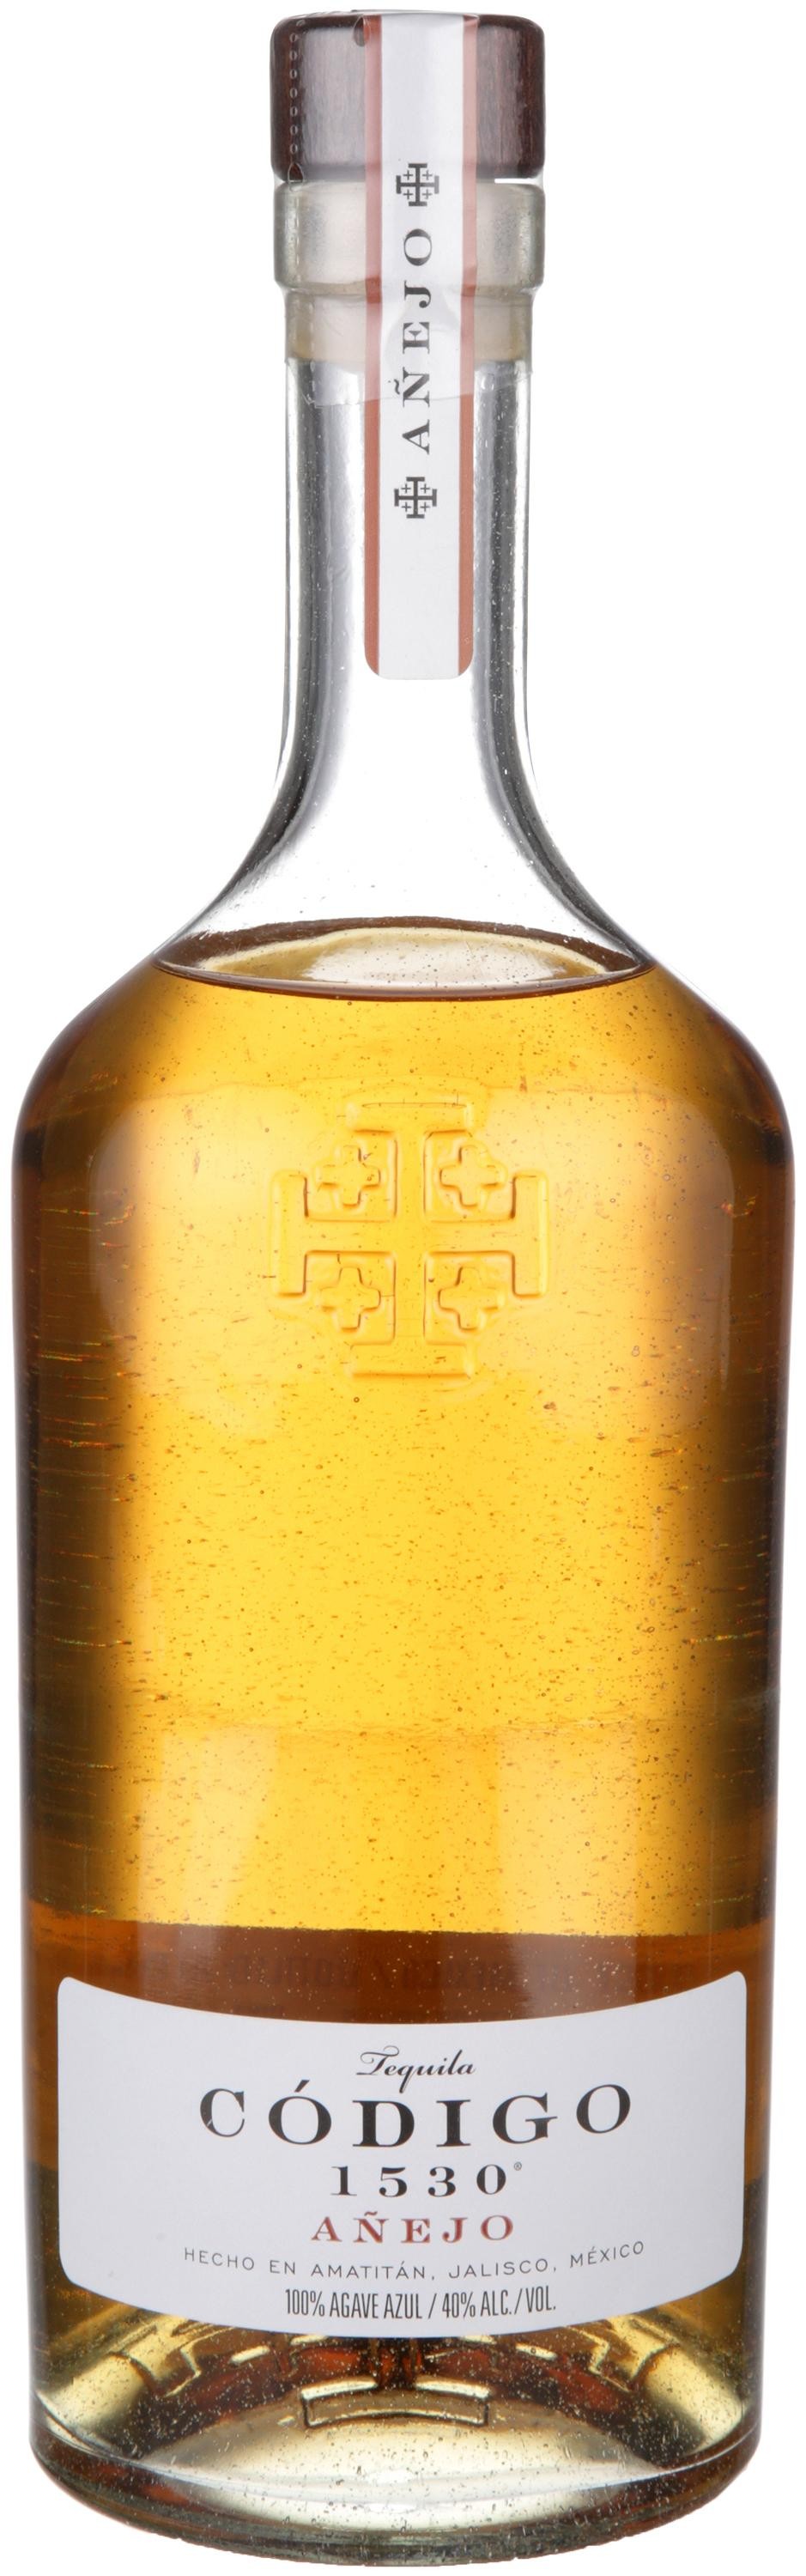 Codigo 1530 Anejo Tequila - 750ml Bottle